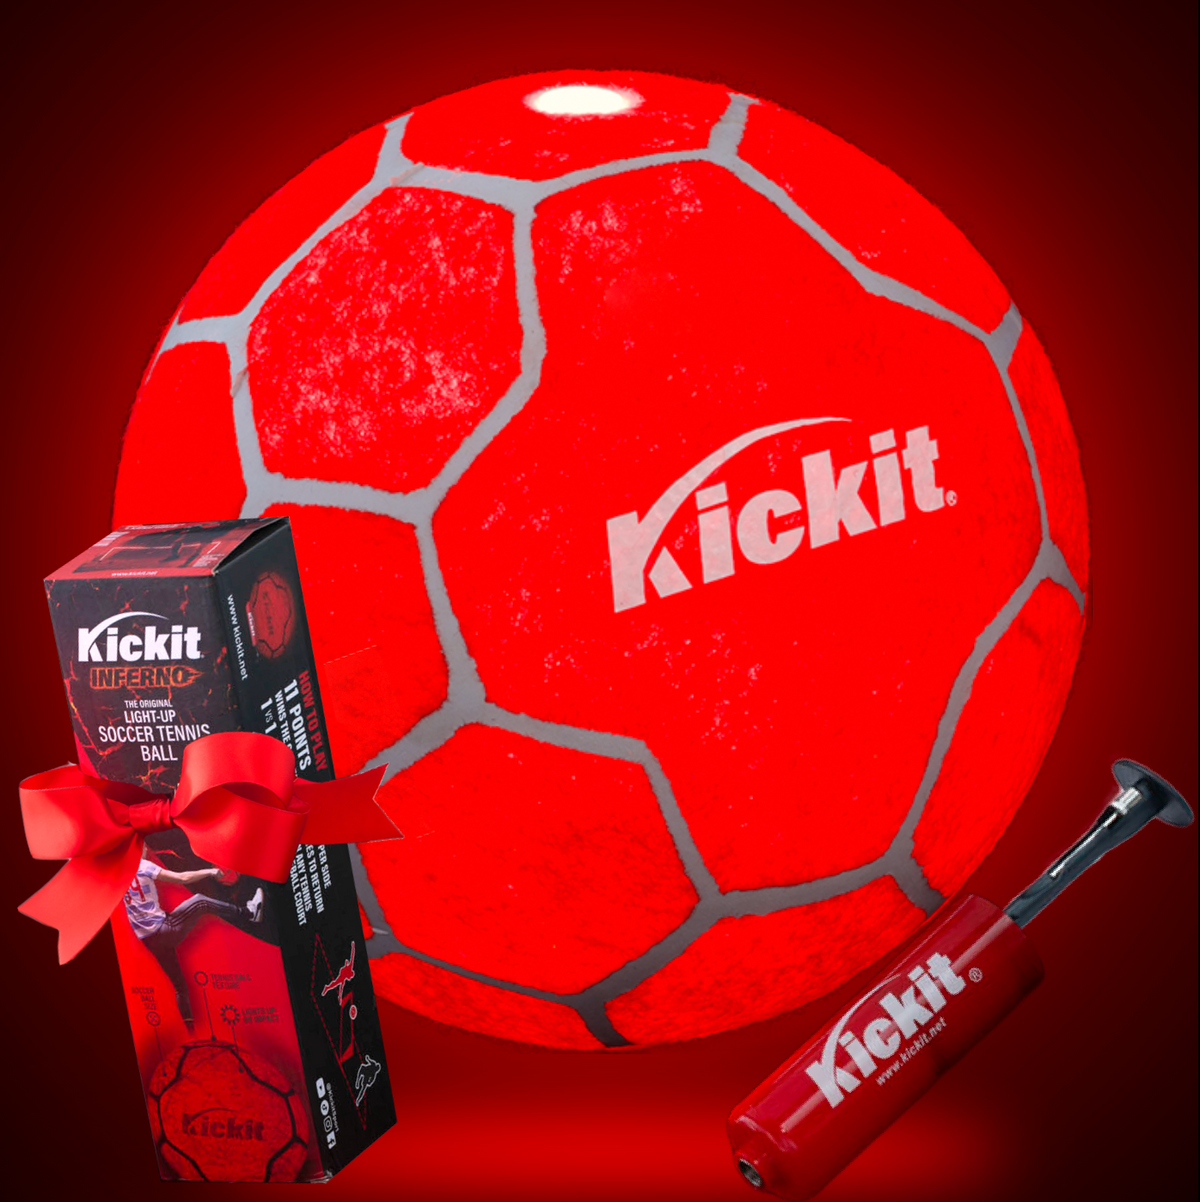 Kickit Inferno Soccer Tennis Ball